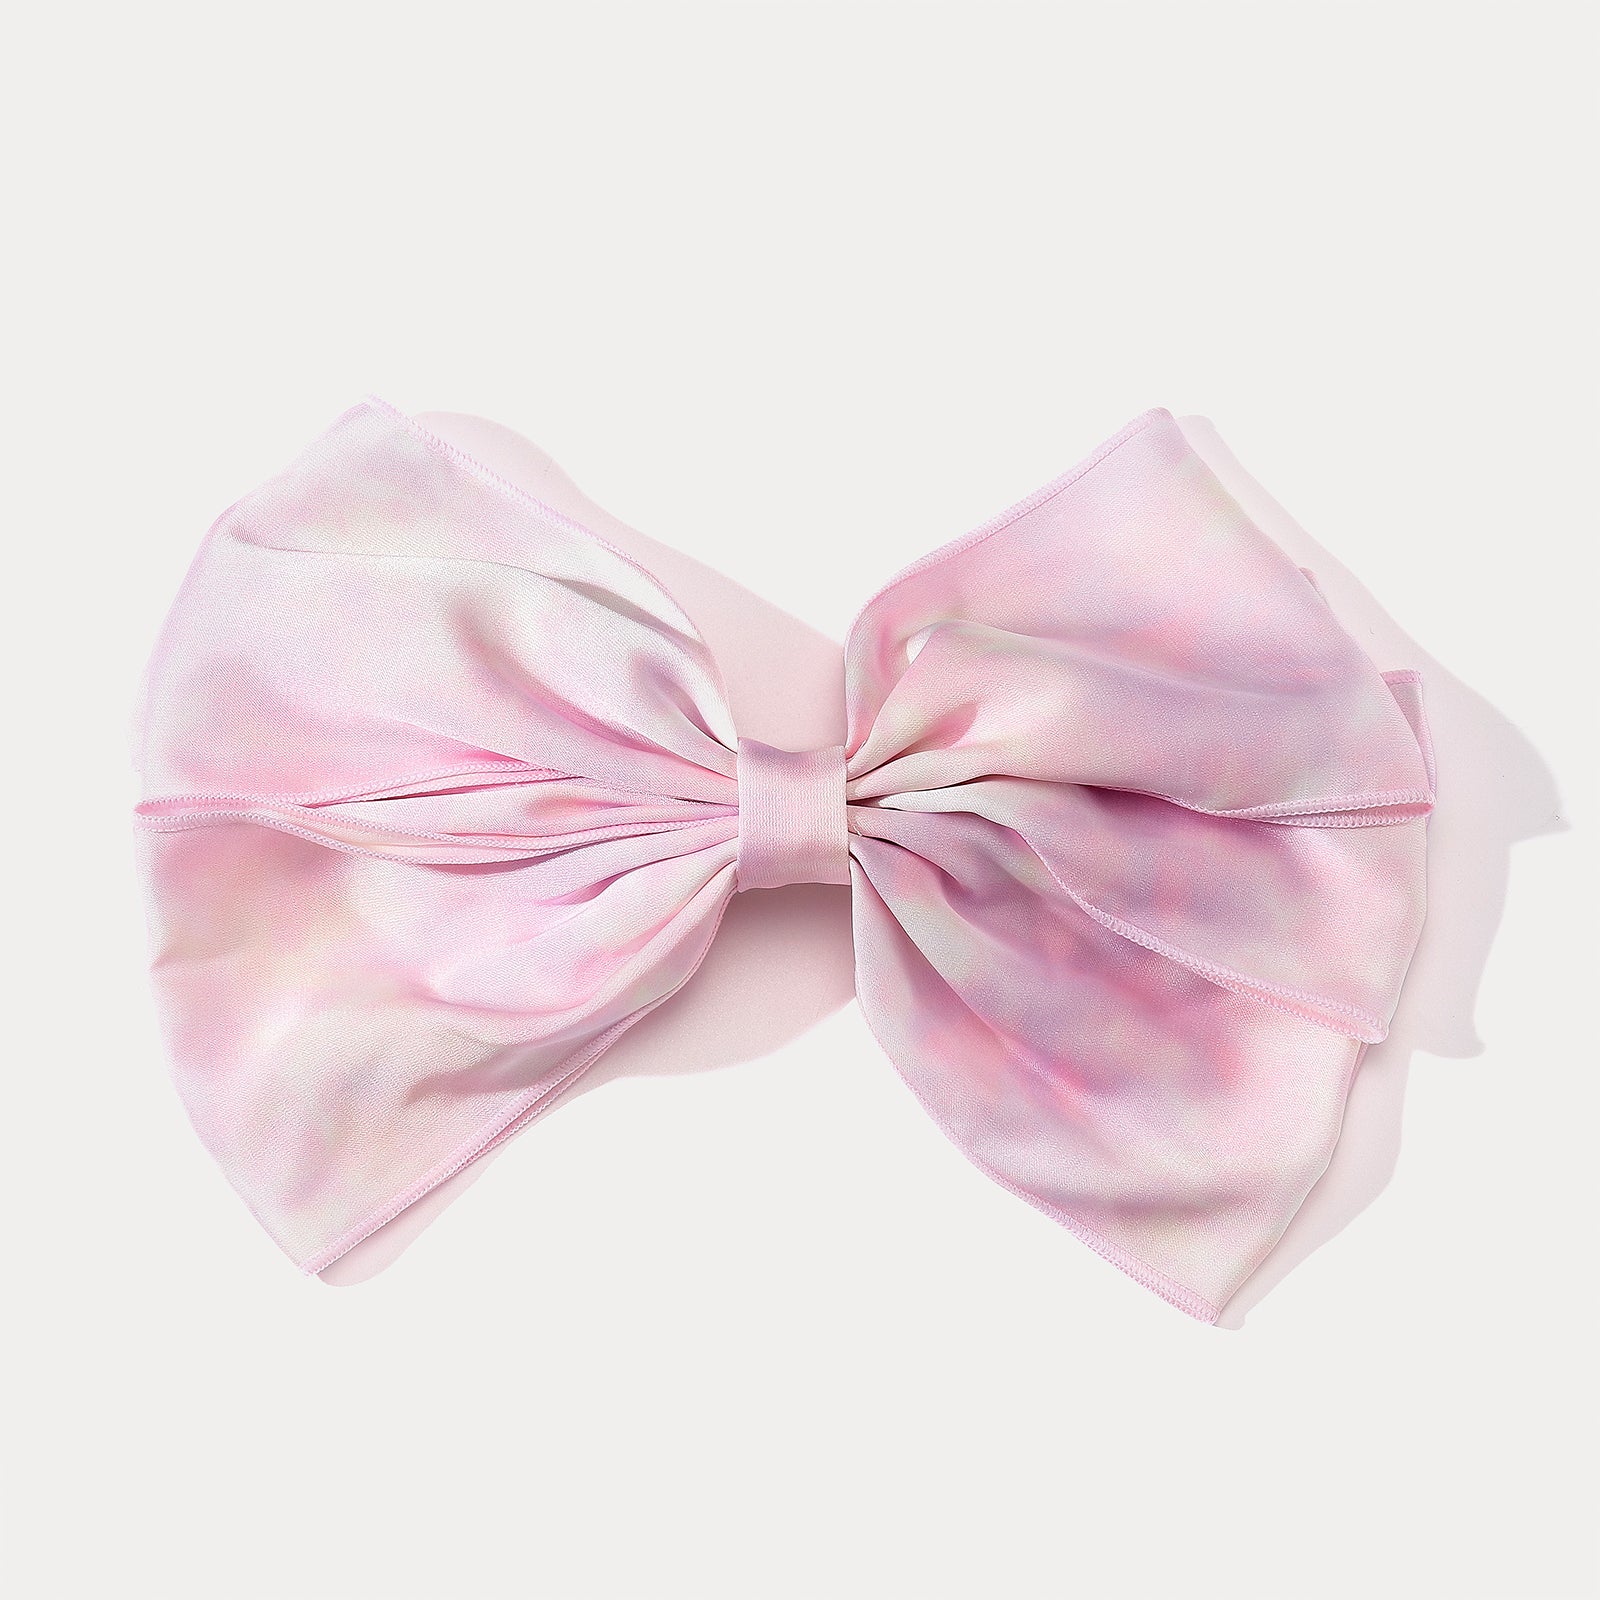 Selenichast Tie Dye Pink Bow Hair Clips